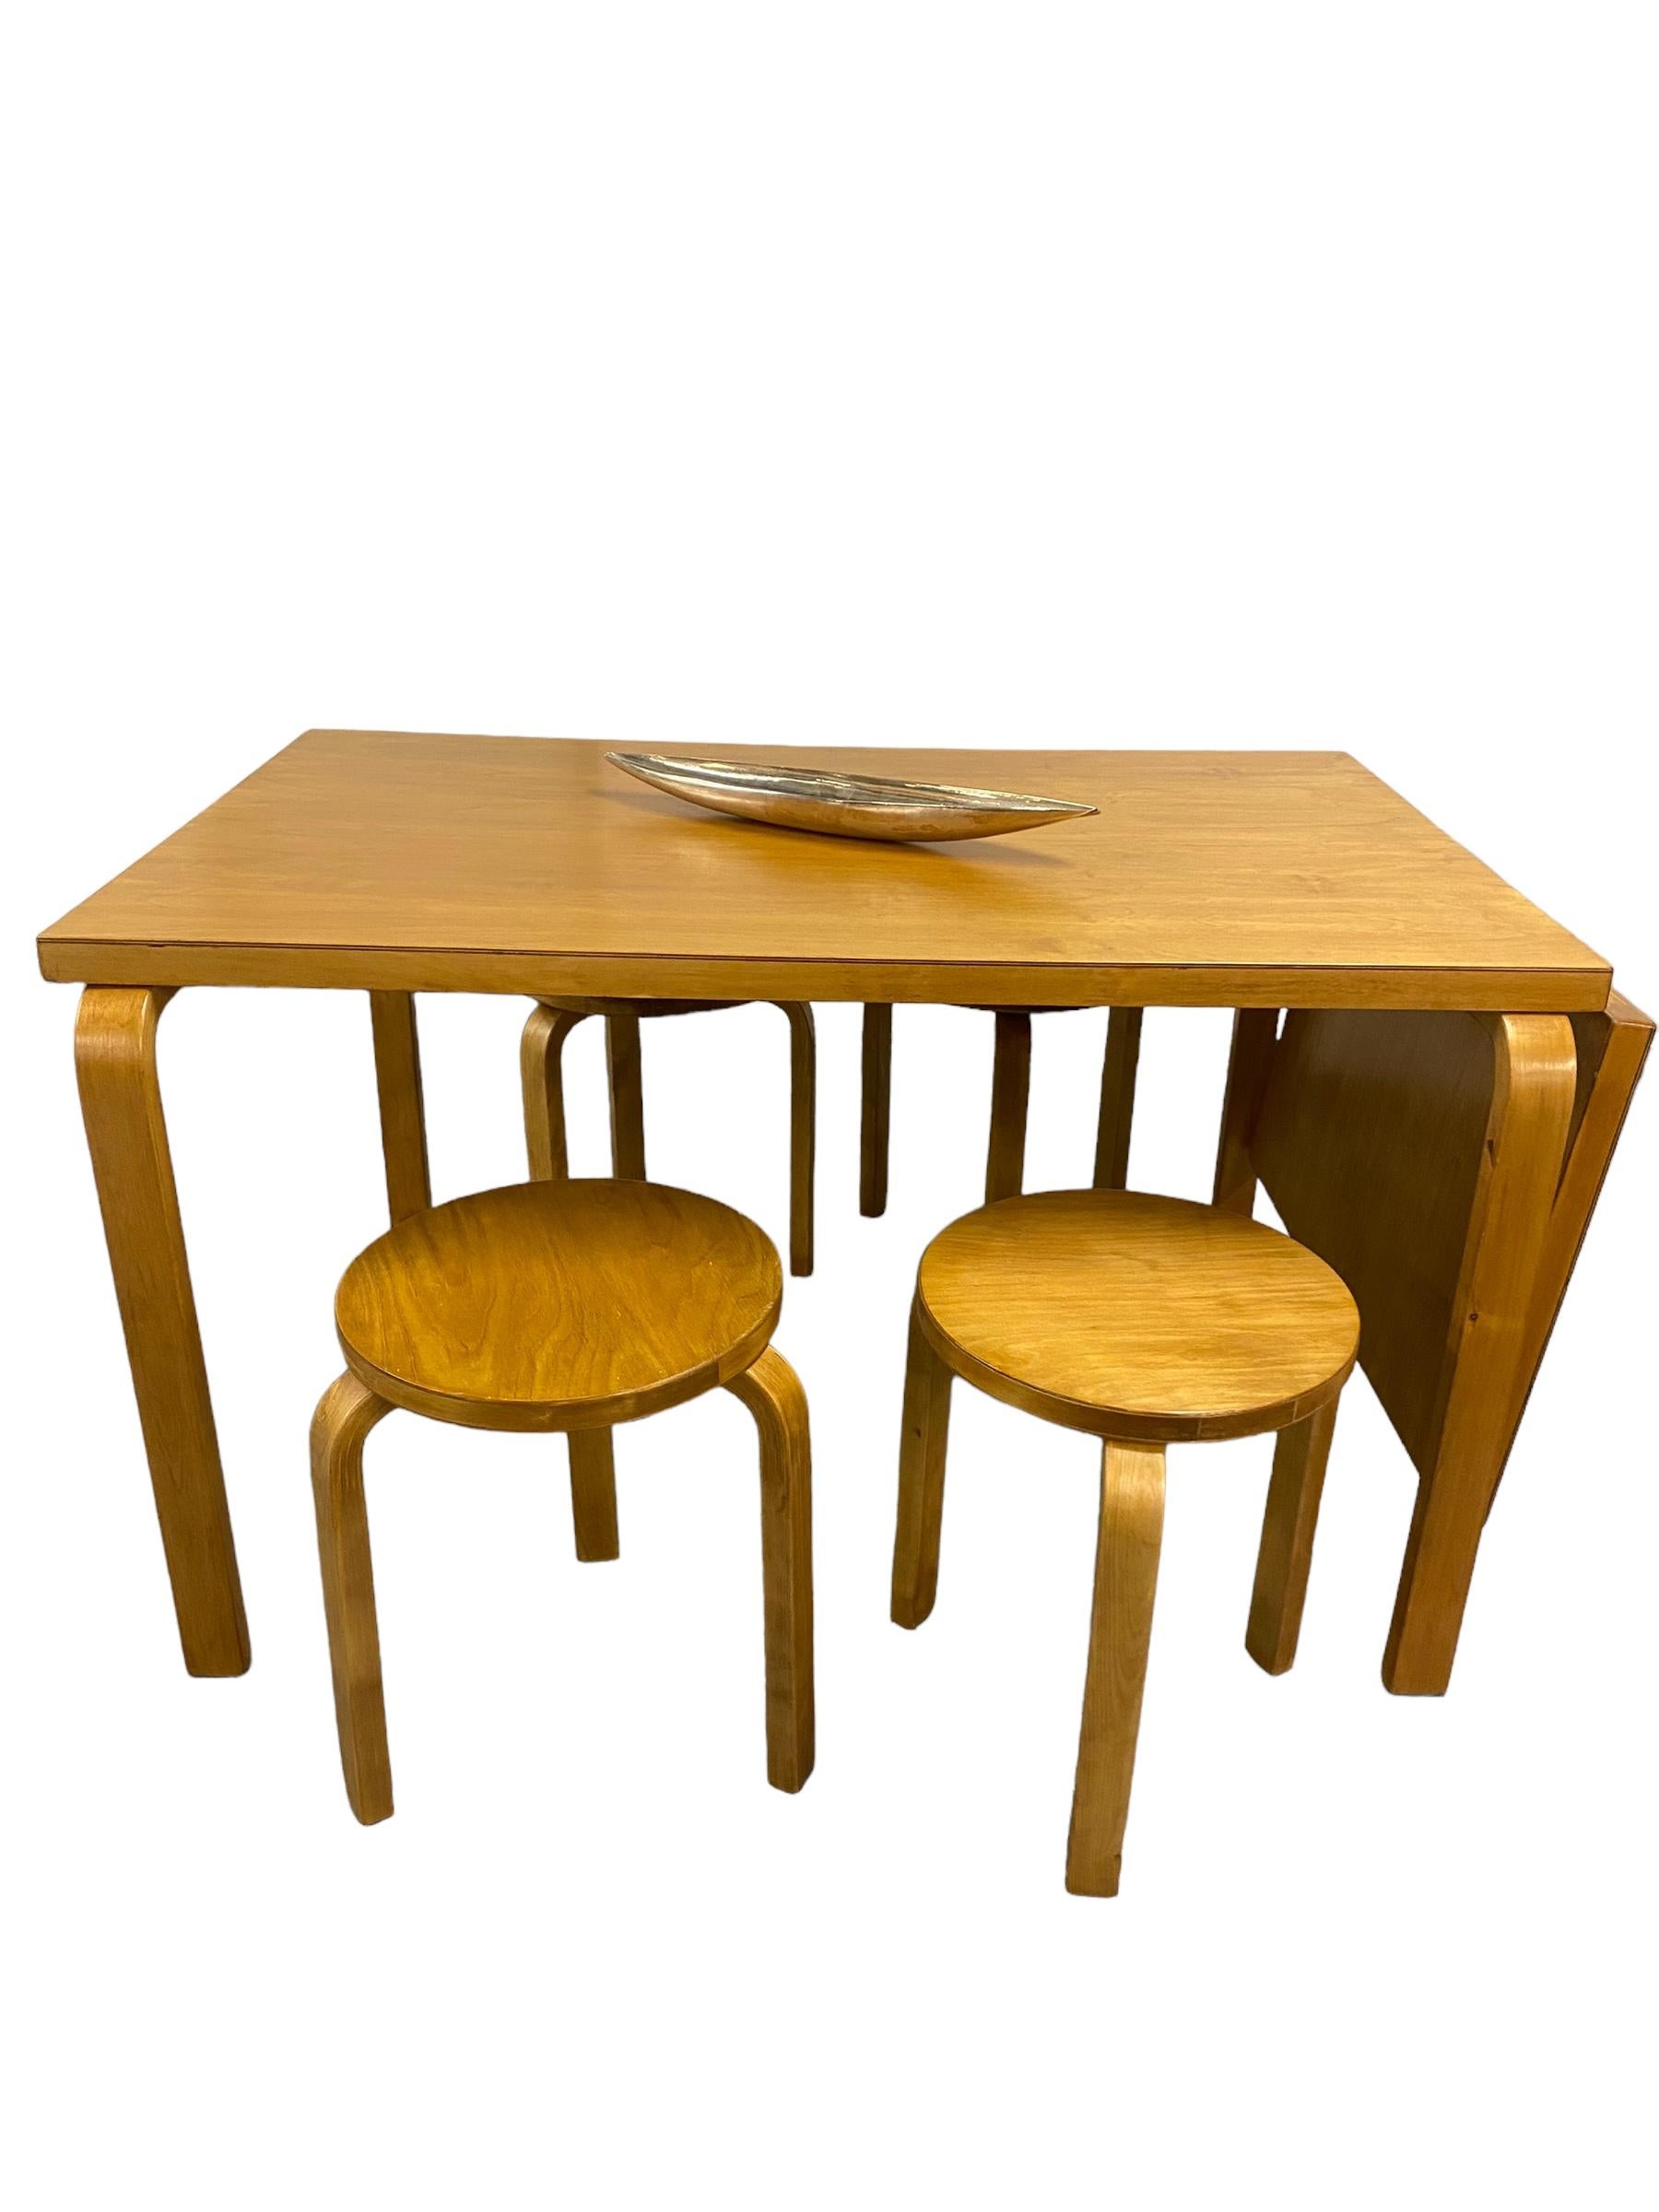 An Alvar Aalto Foldable Table in Birch,  Artek 1950s For Sale 3